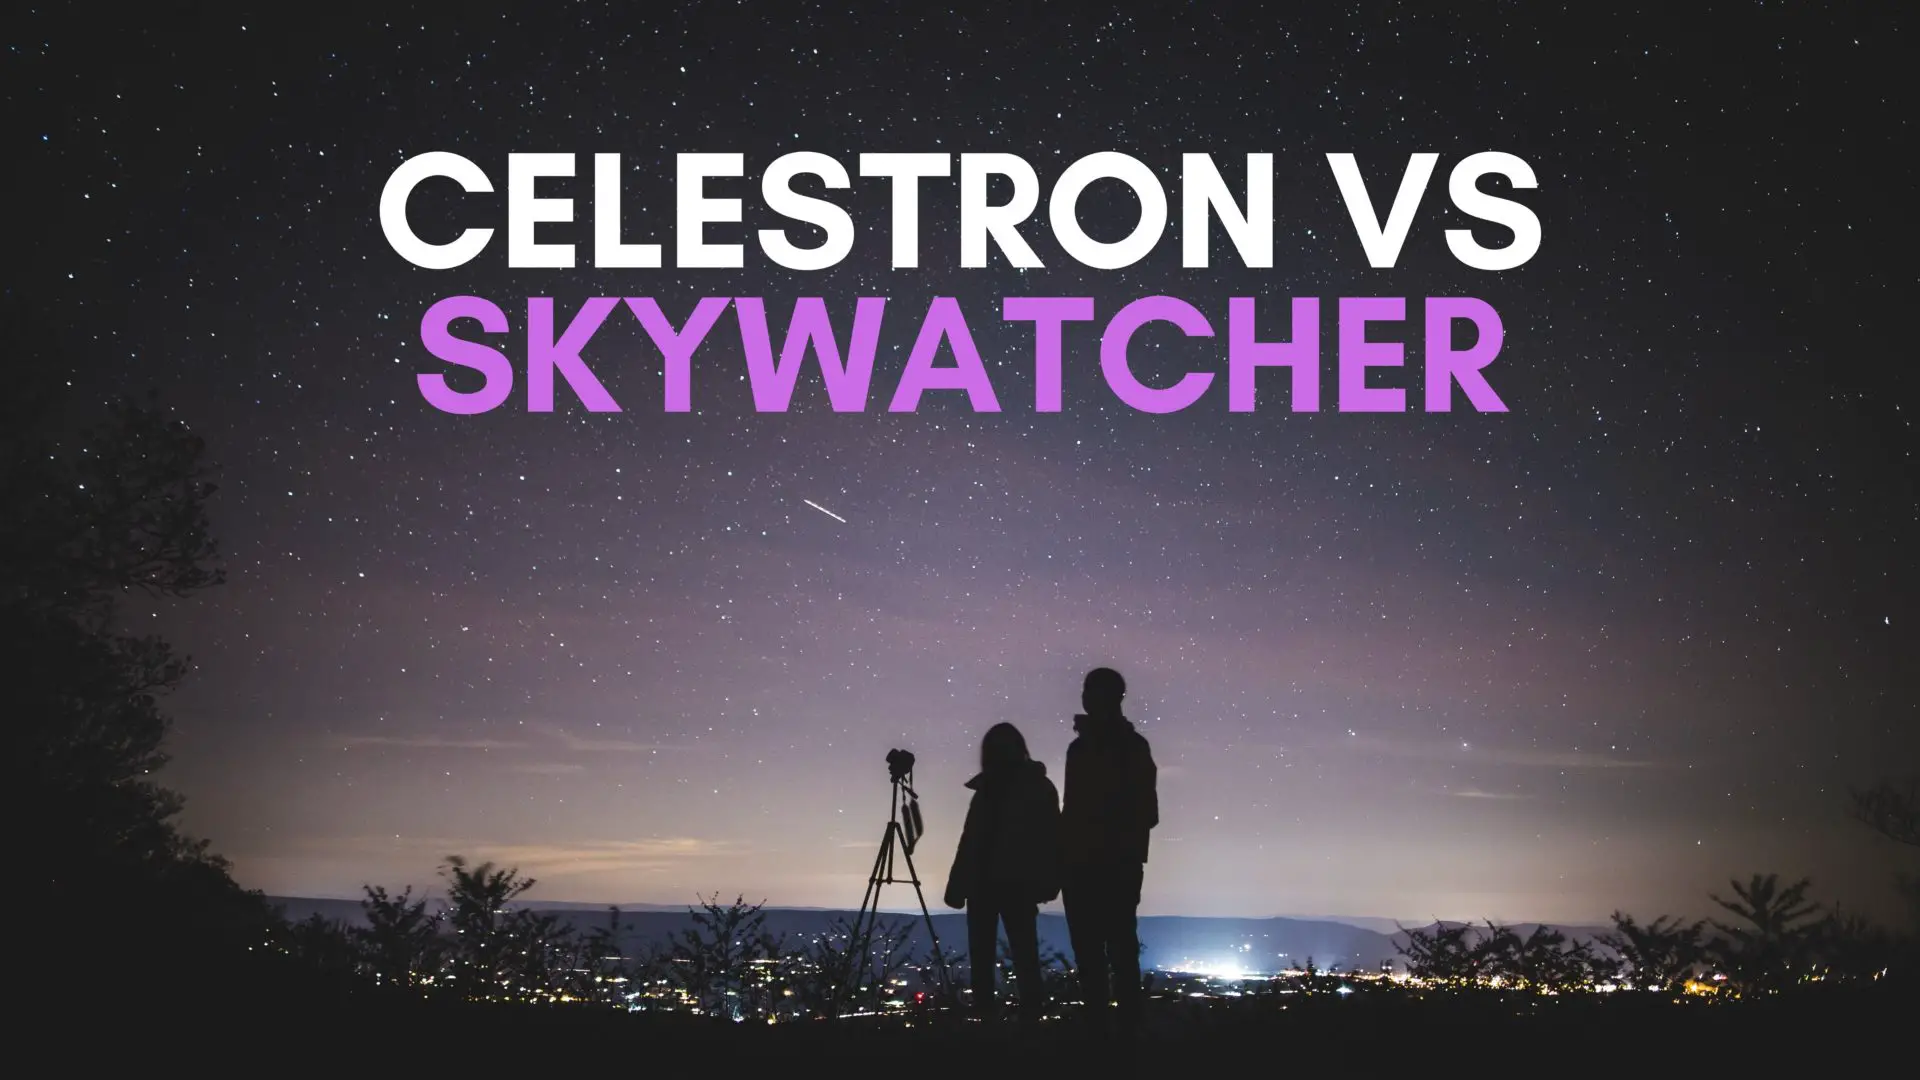 Celestron vs Skywatcher